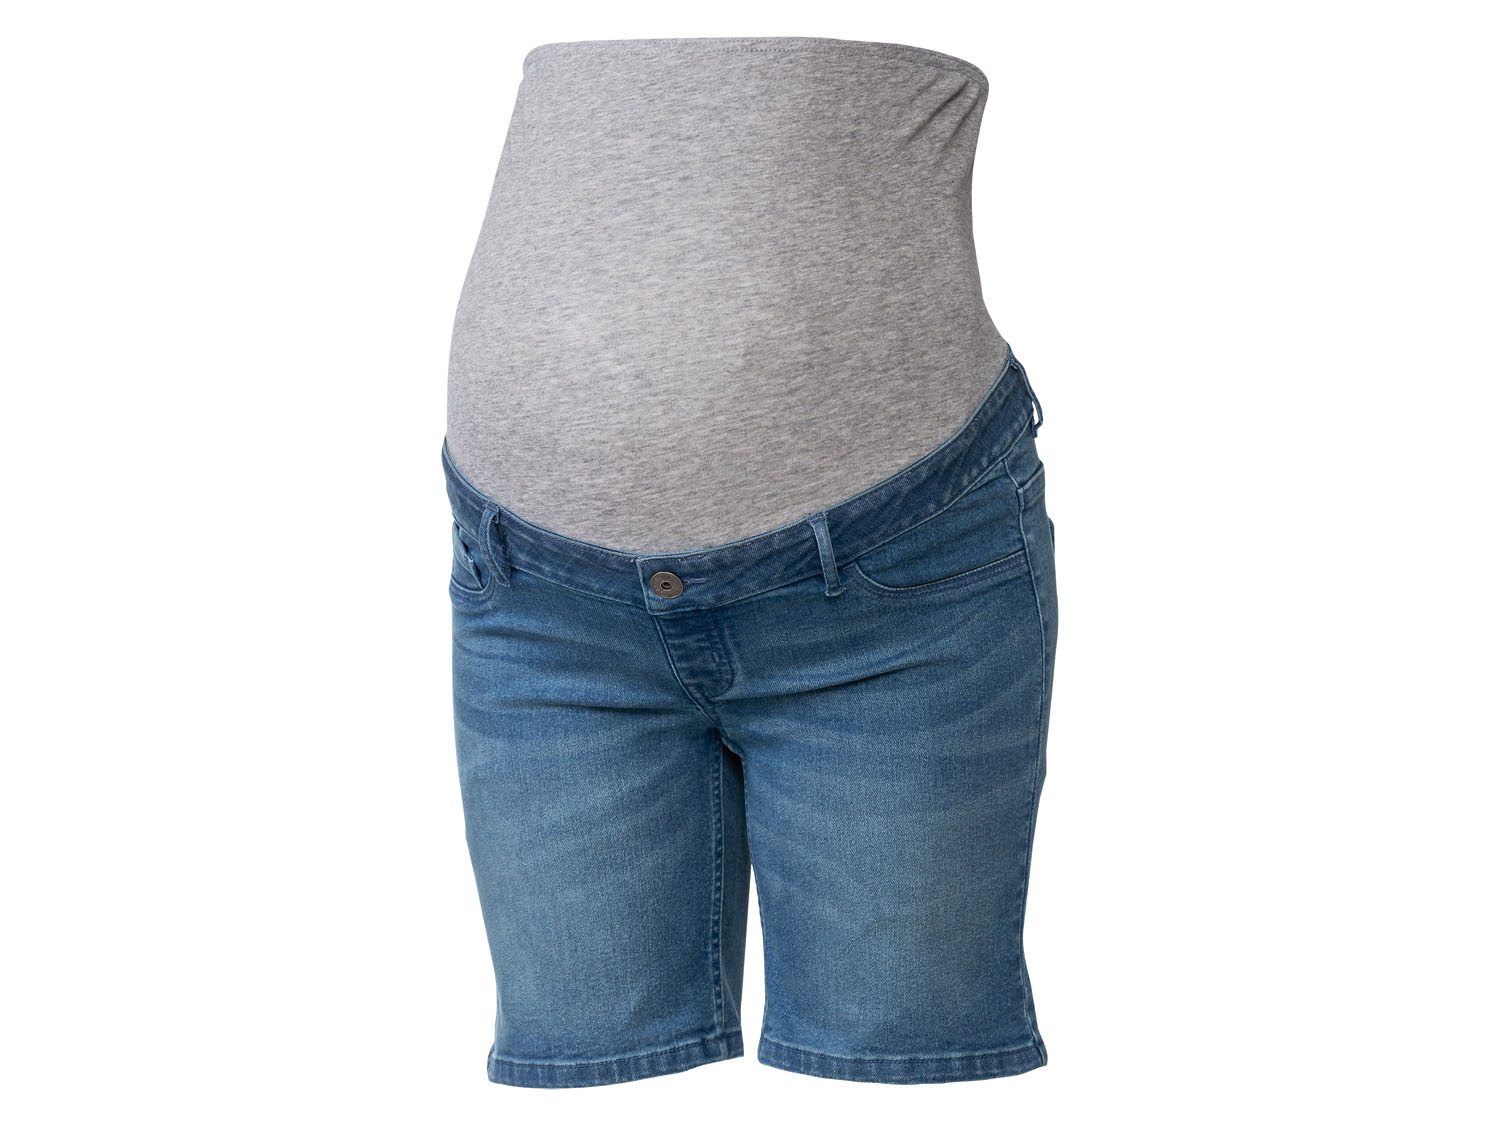 Rabatt 70 % Weiß 36 DAMEN Jeans Shorts jeans Basisch Esmara Shorts jeans 